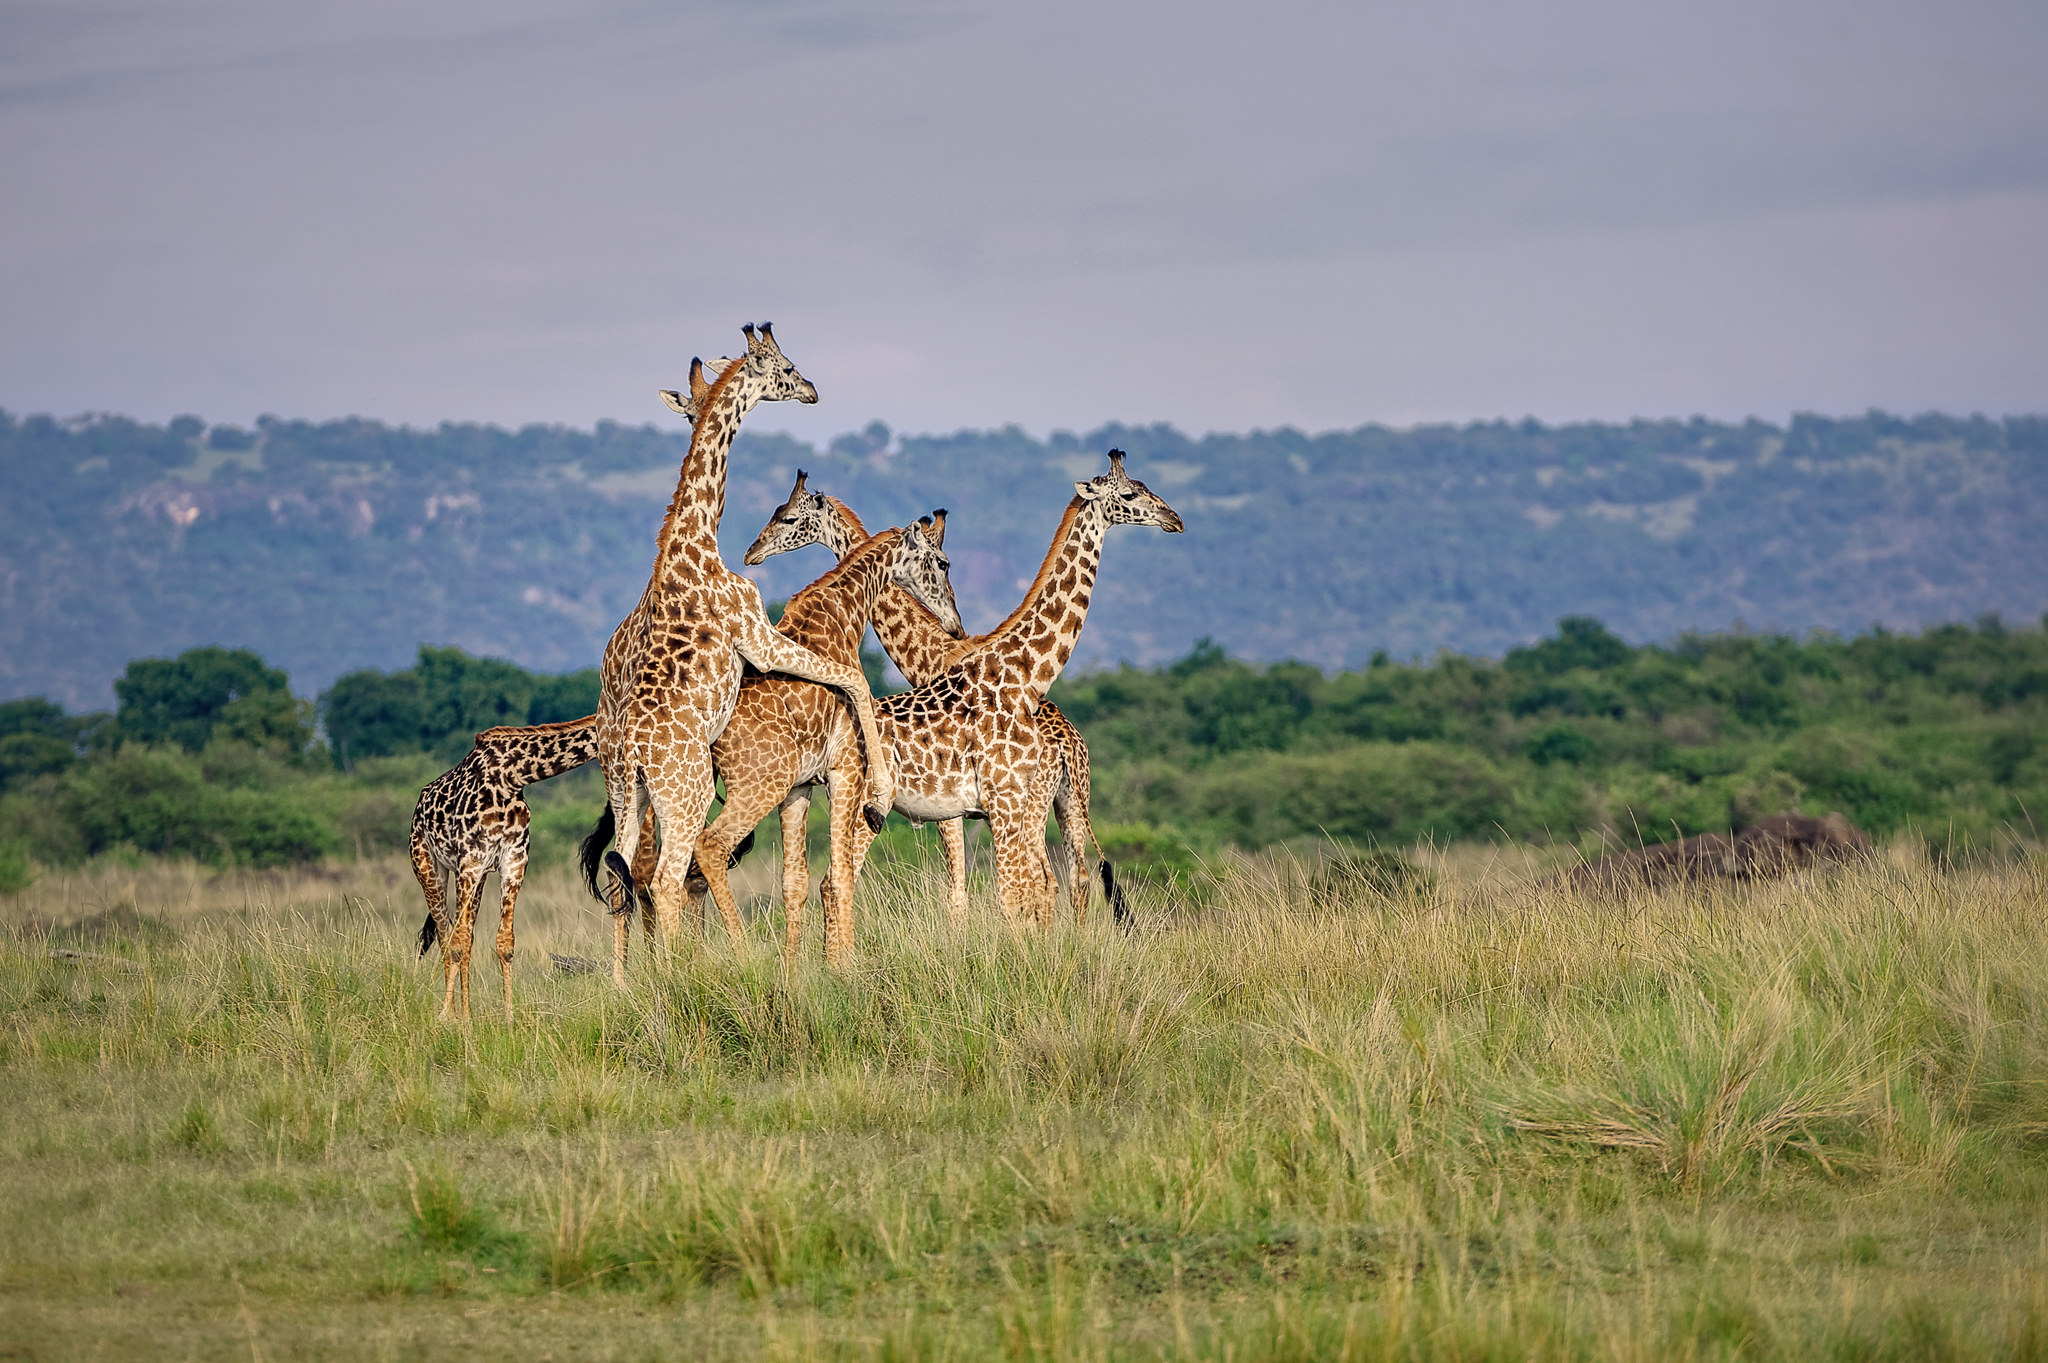 Giraffe Reproduction